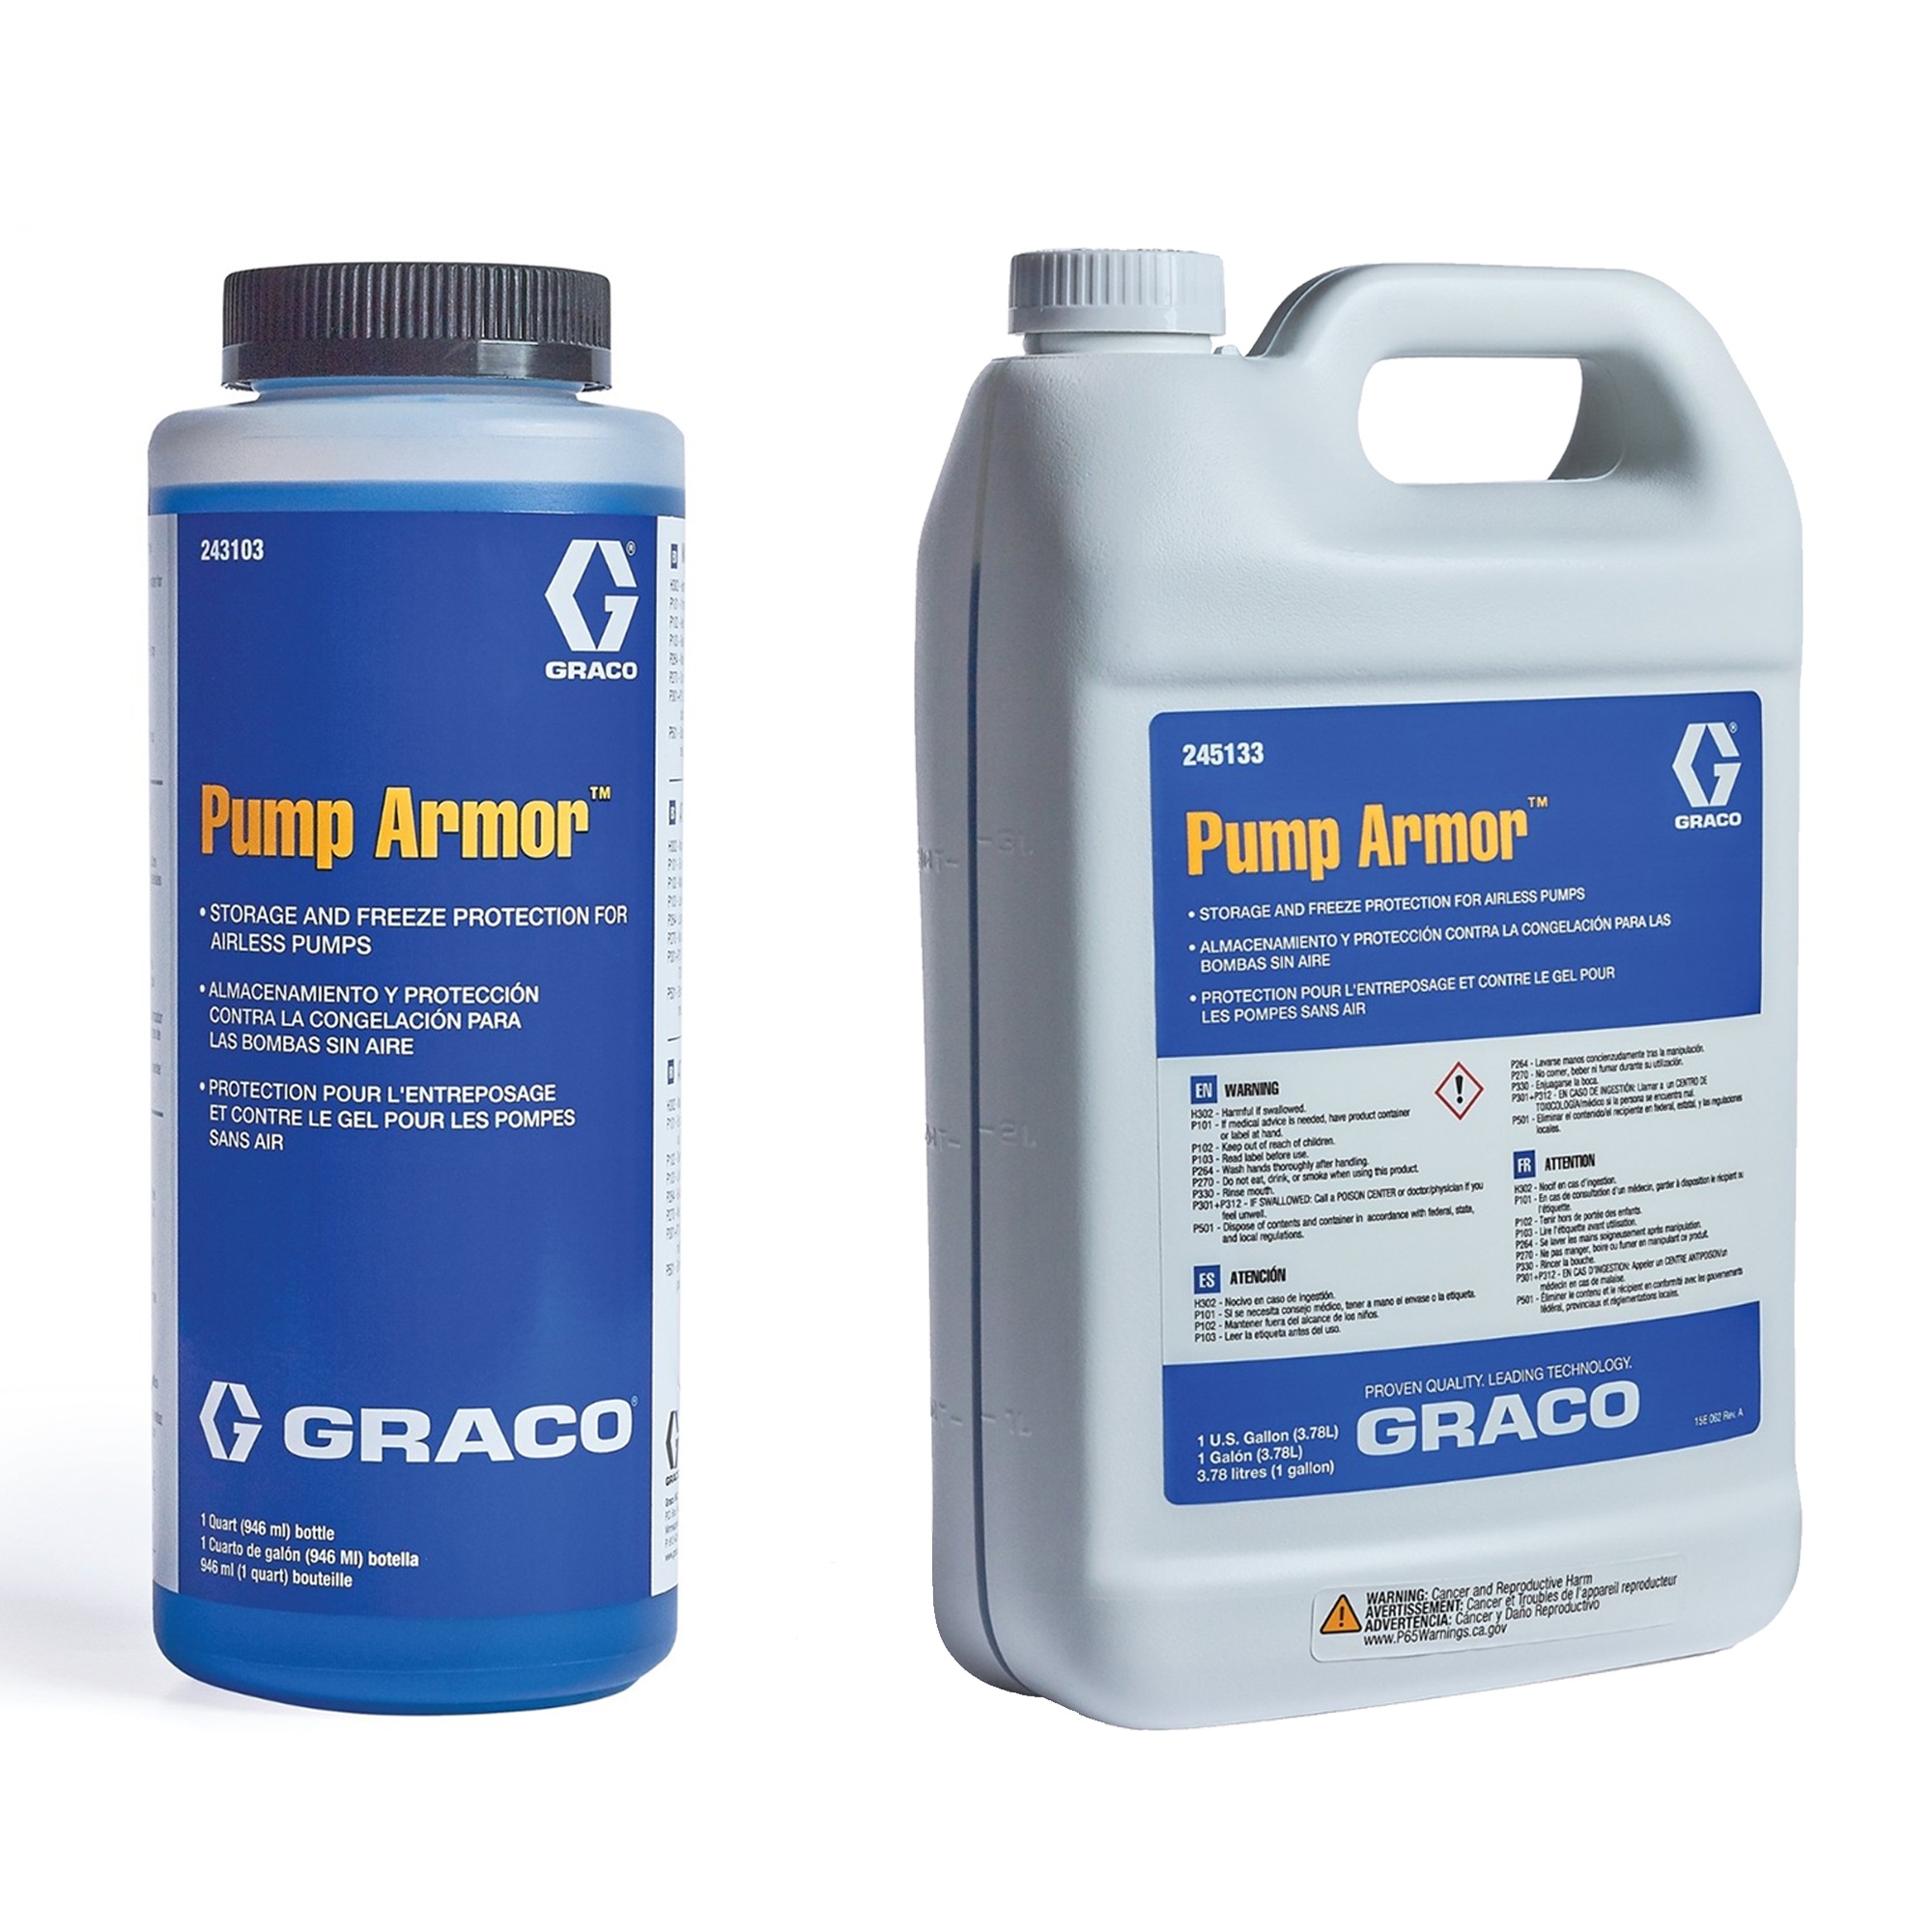 Graco Pump Armor Liquid 3.8 Liter 245133 